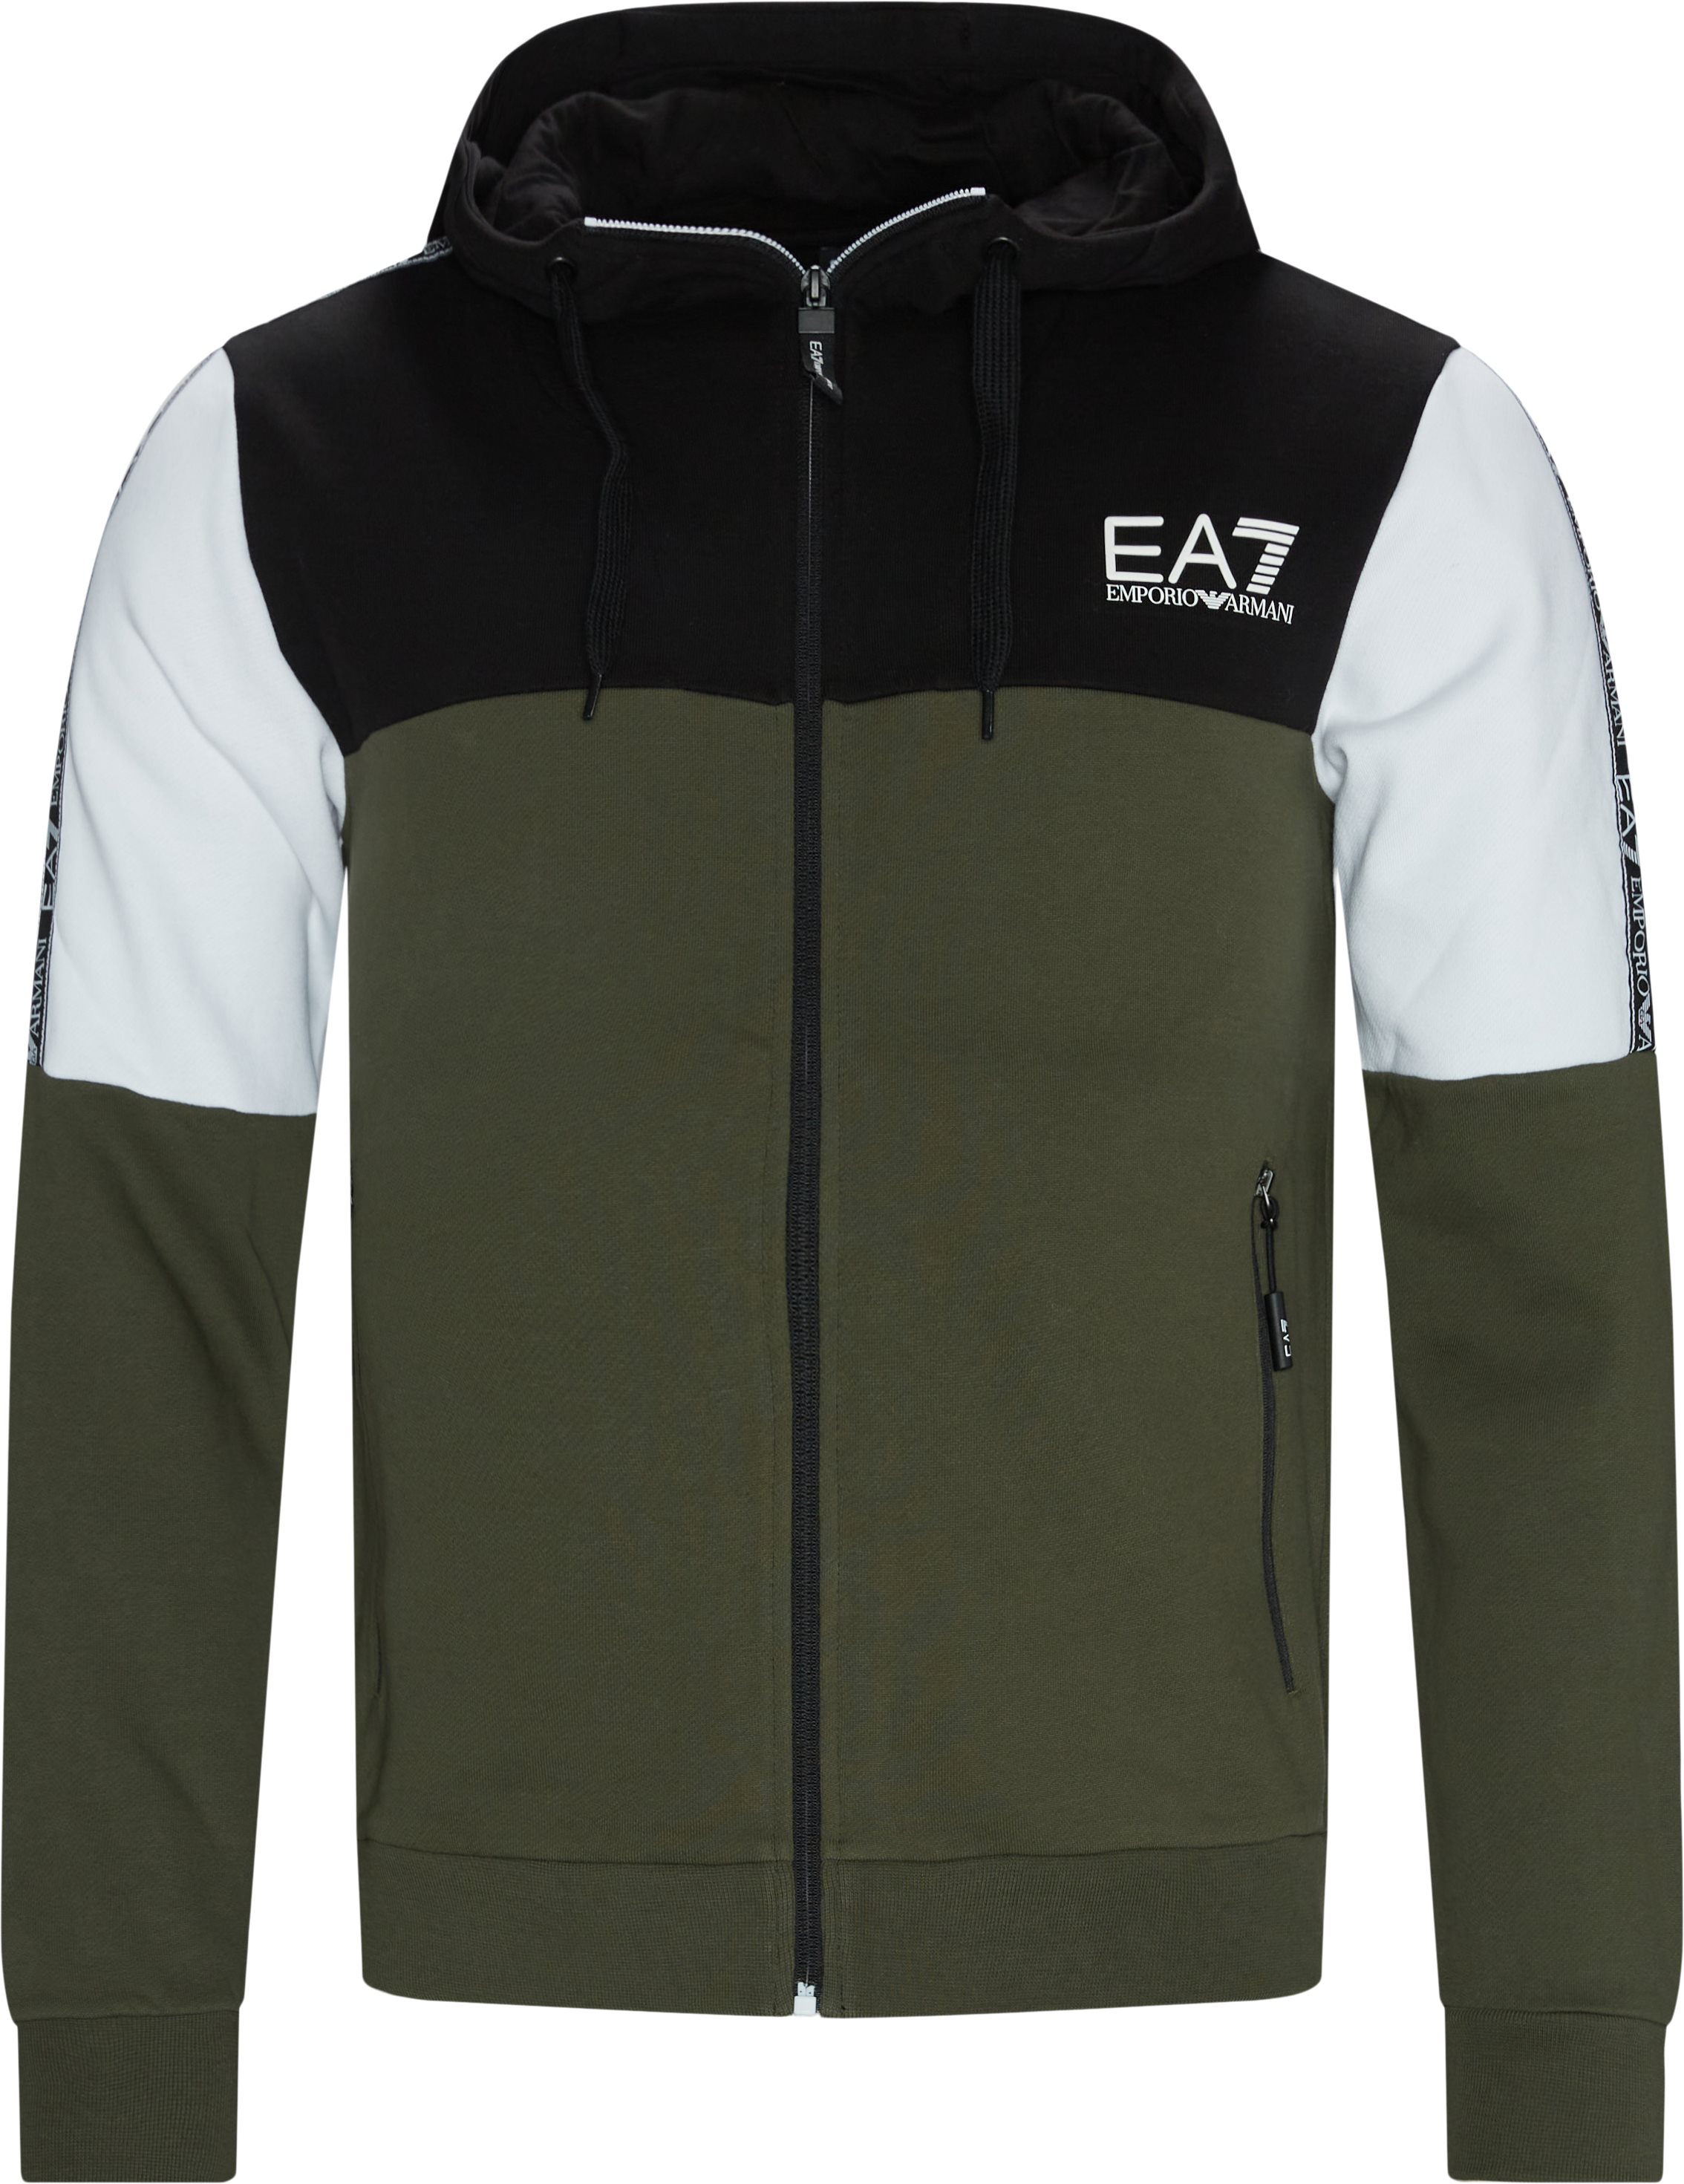 Pj07z-6kpv63 Zip Sweatshirt - Sweatshirts - Regular fit - Grøn